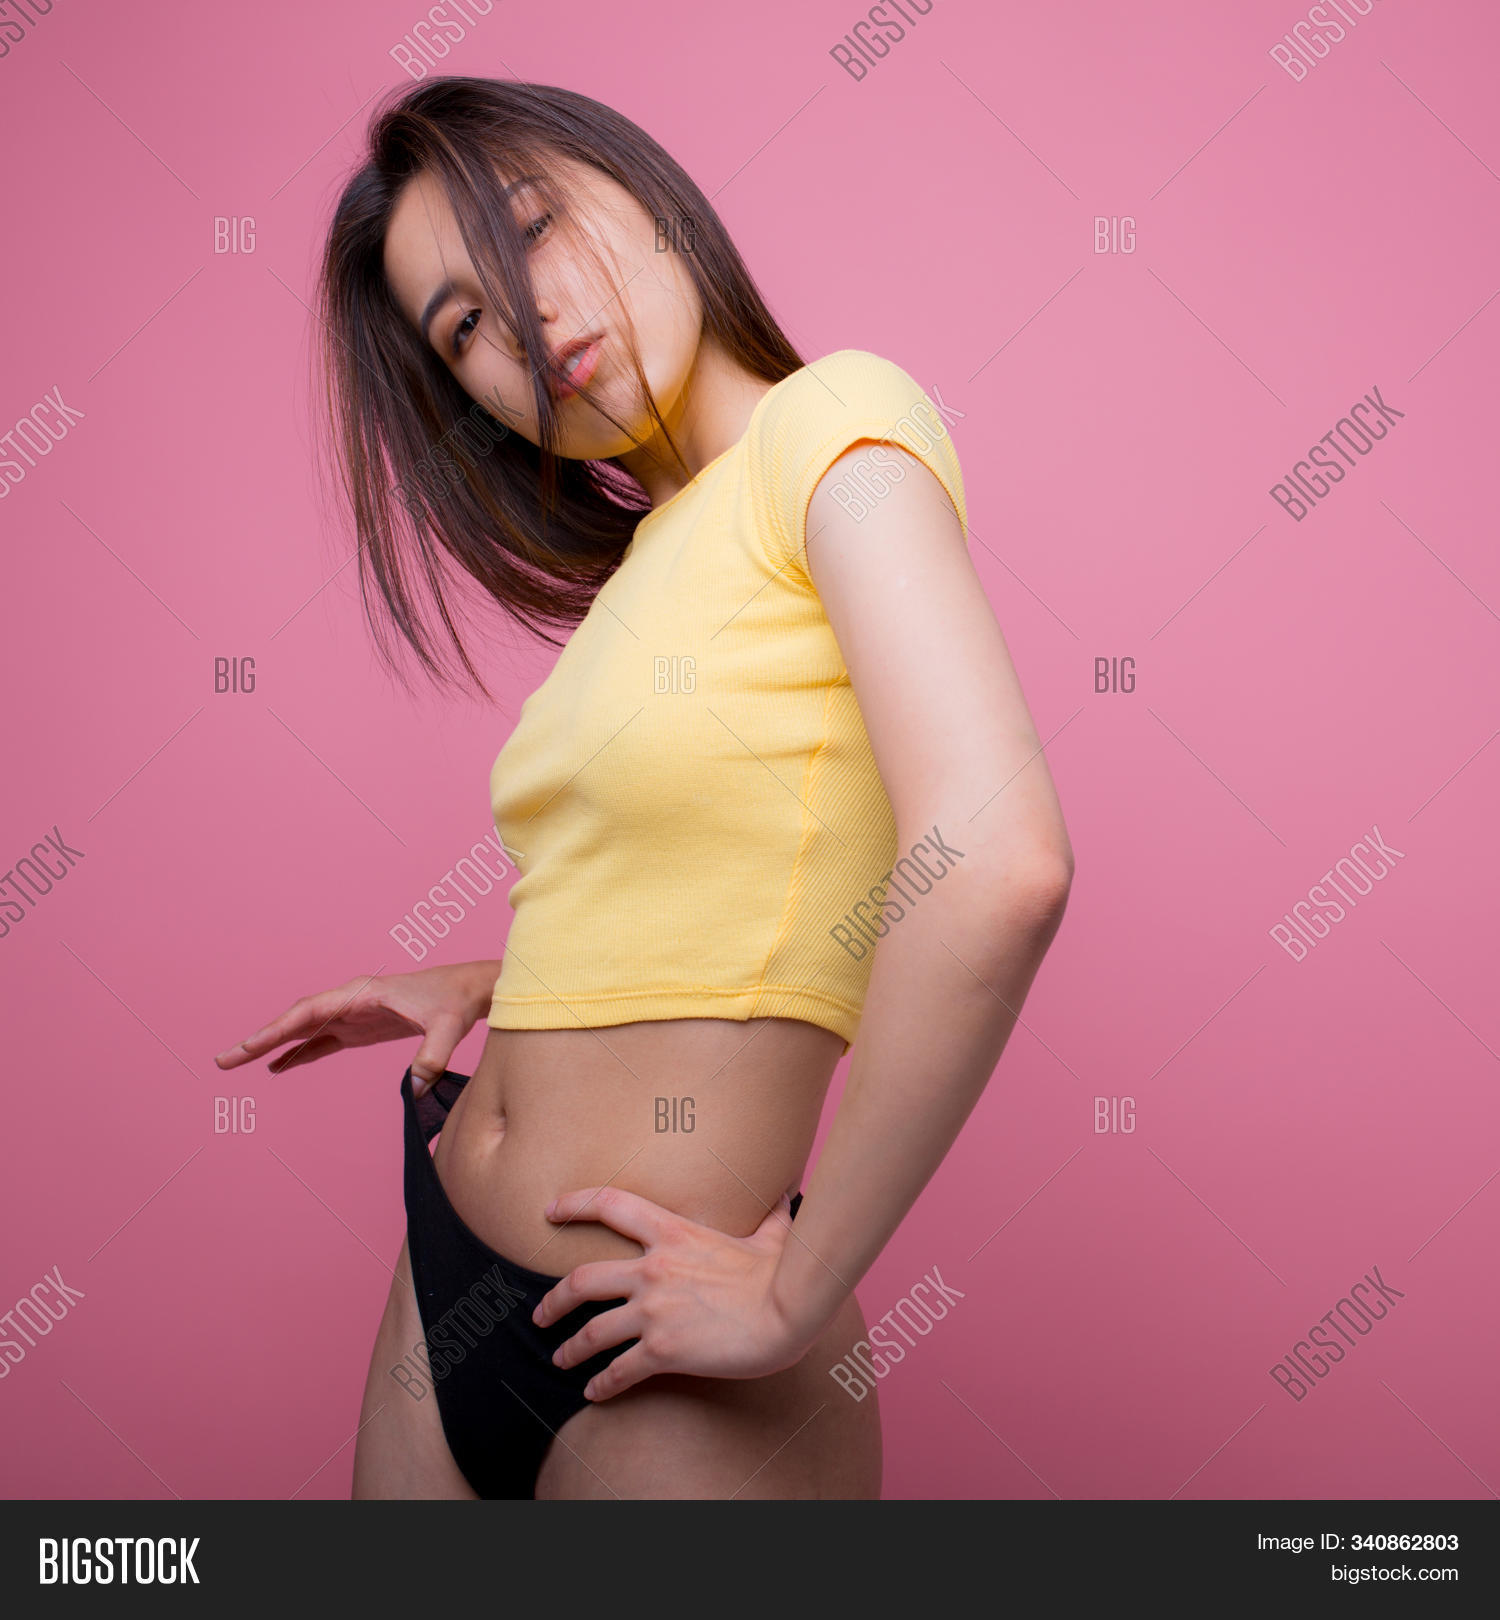 dakota wray recommends asian woman in panties pic